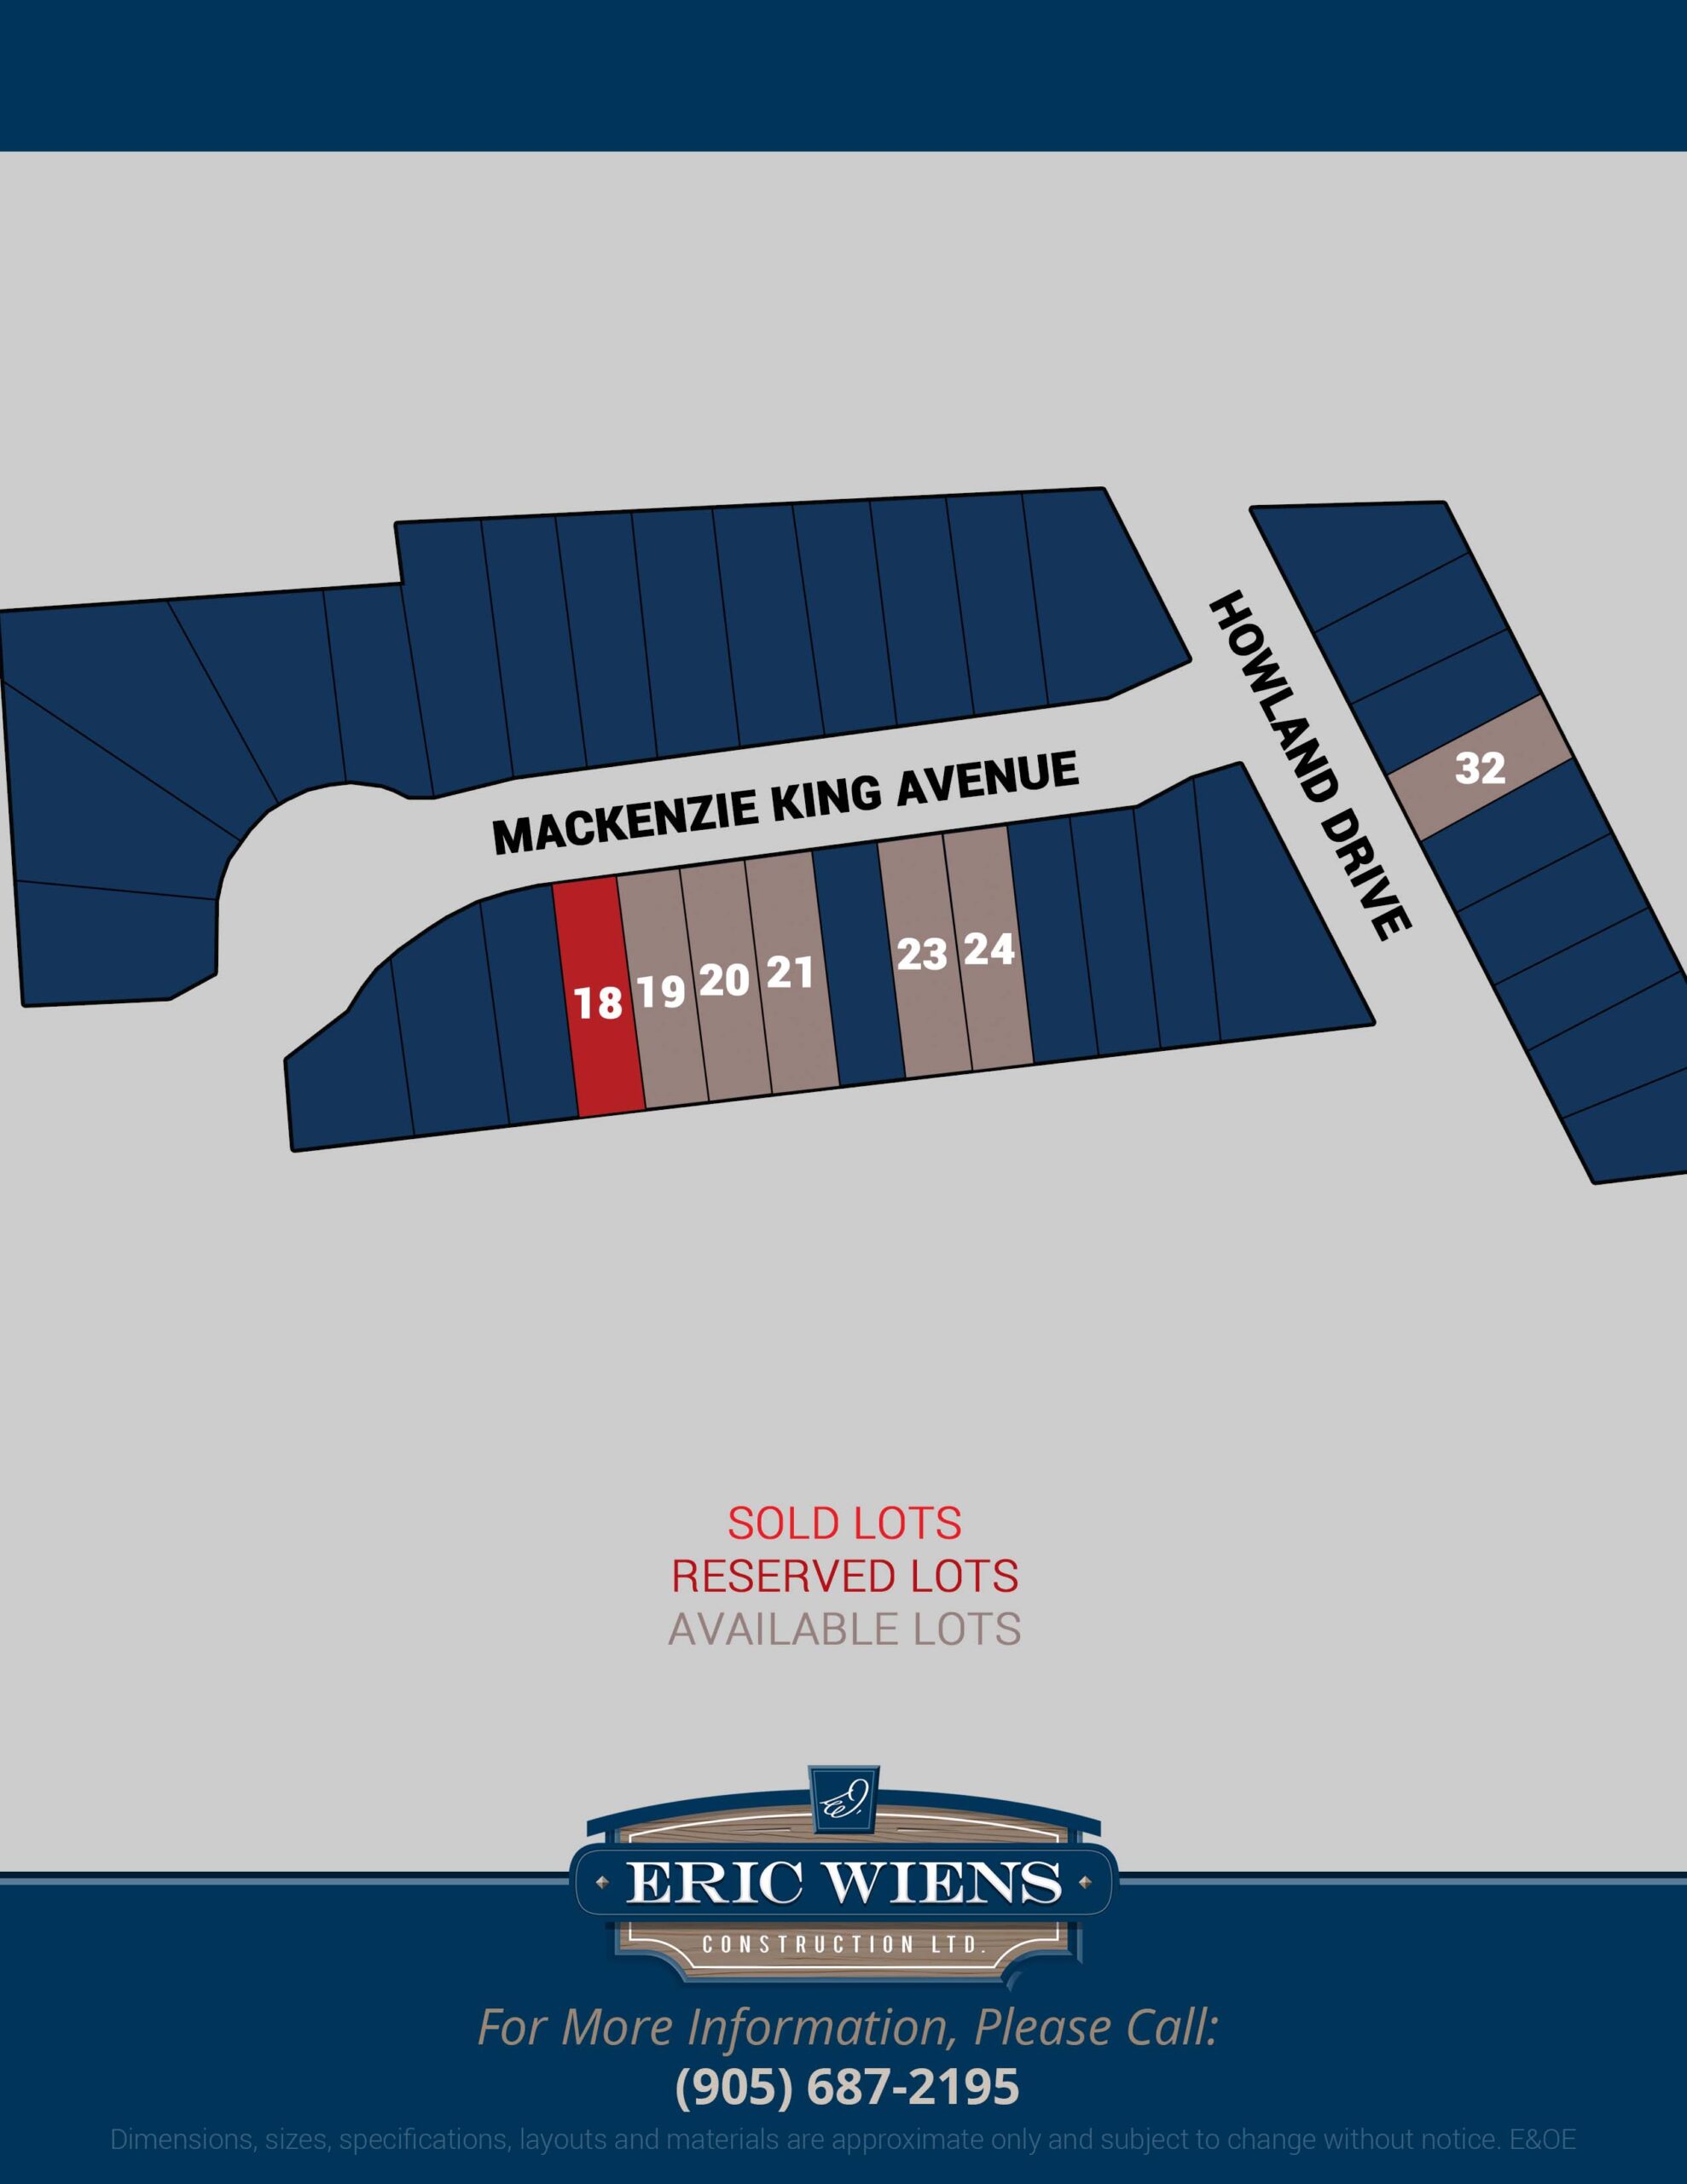 Lot 18 Mackenzie King Avenue Site Plan